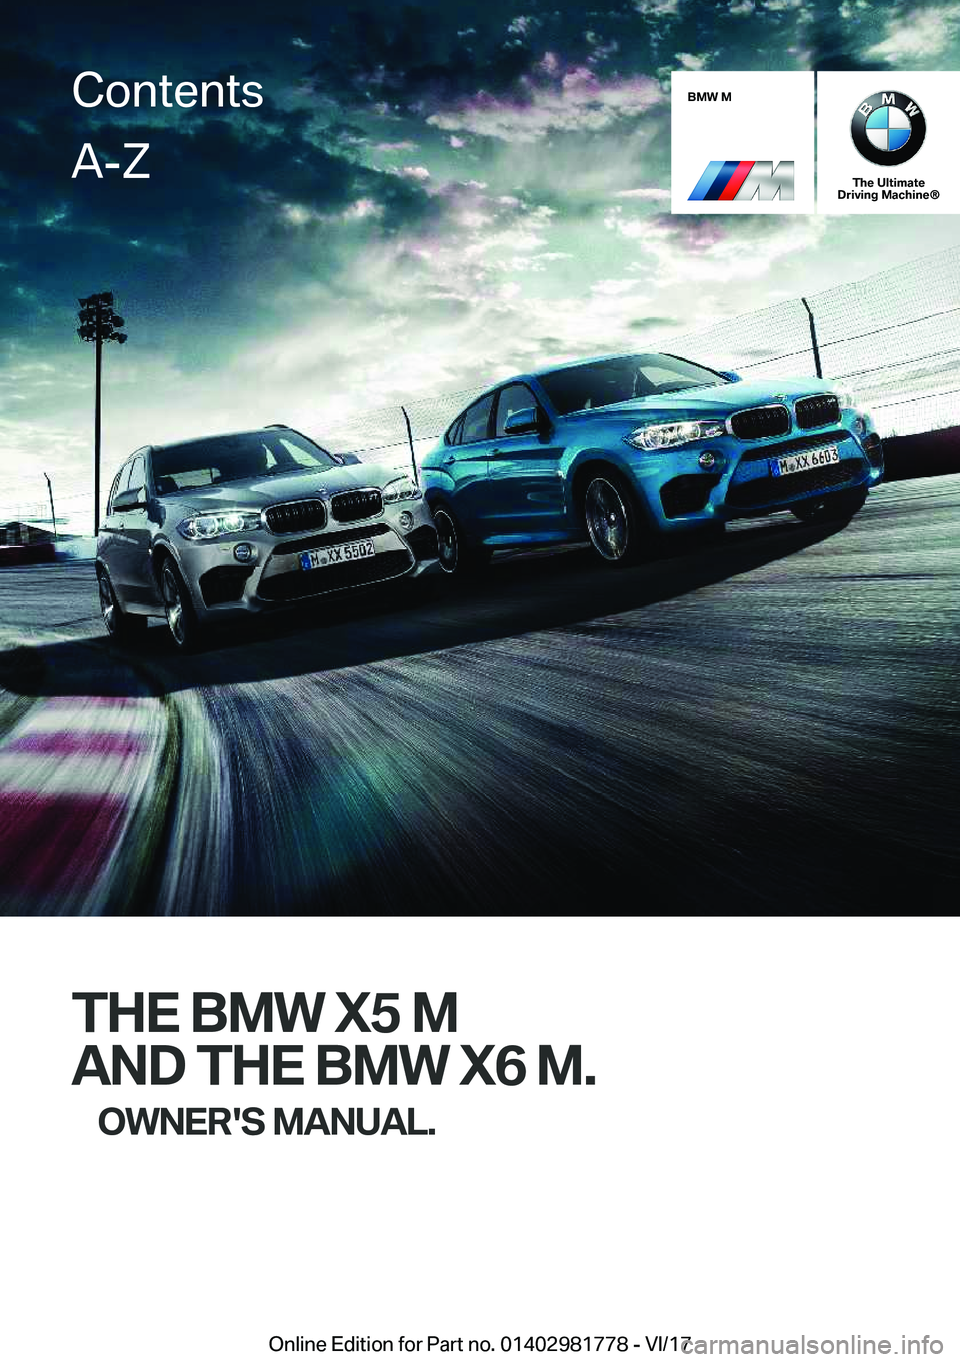 BMW X6 M 2018  Owners Manual �B�M�W��M
�T�h�e��U�l�t�i�m�a�t�e
�D�r�i�v�i�n�g��M�a�c�h�i�n�e�n
�T�H�E��B�M�W��X�5��M
�A�N�D��T�H�E��B�M�W��X�6��M�. �O�W�N�E�R�'�S��M�A�N�U�A�L�.
�C�o�n�t�e�n�t�s�A�-�Z
�O�n�l�i�n�e�